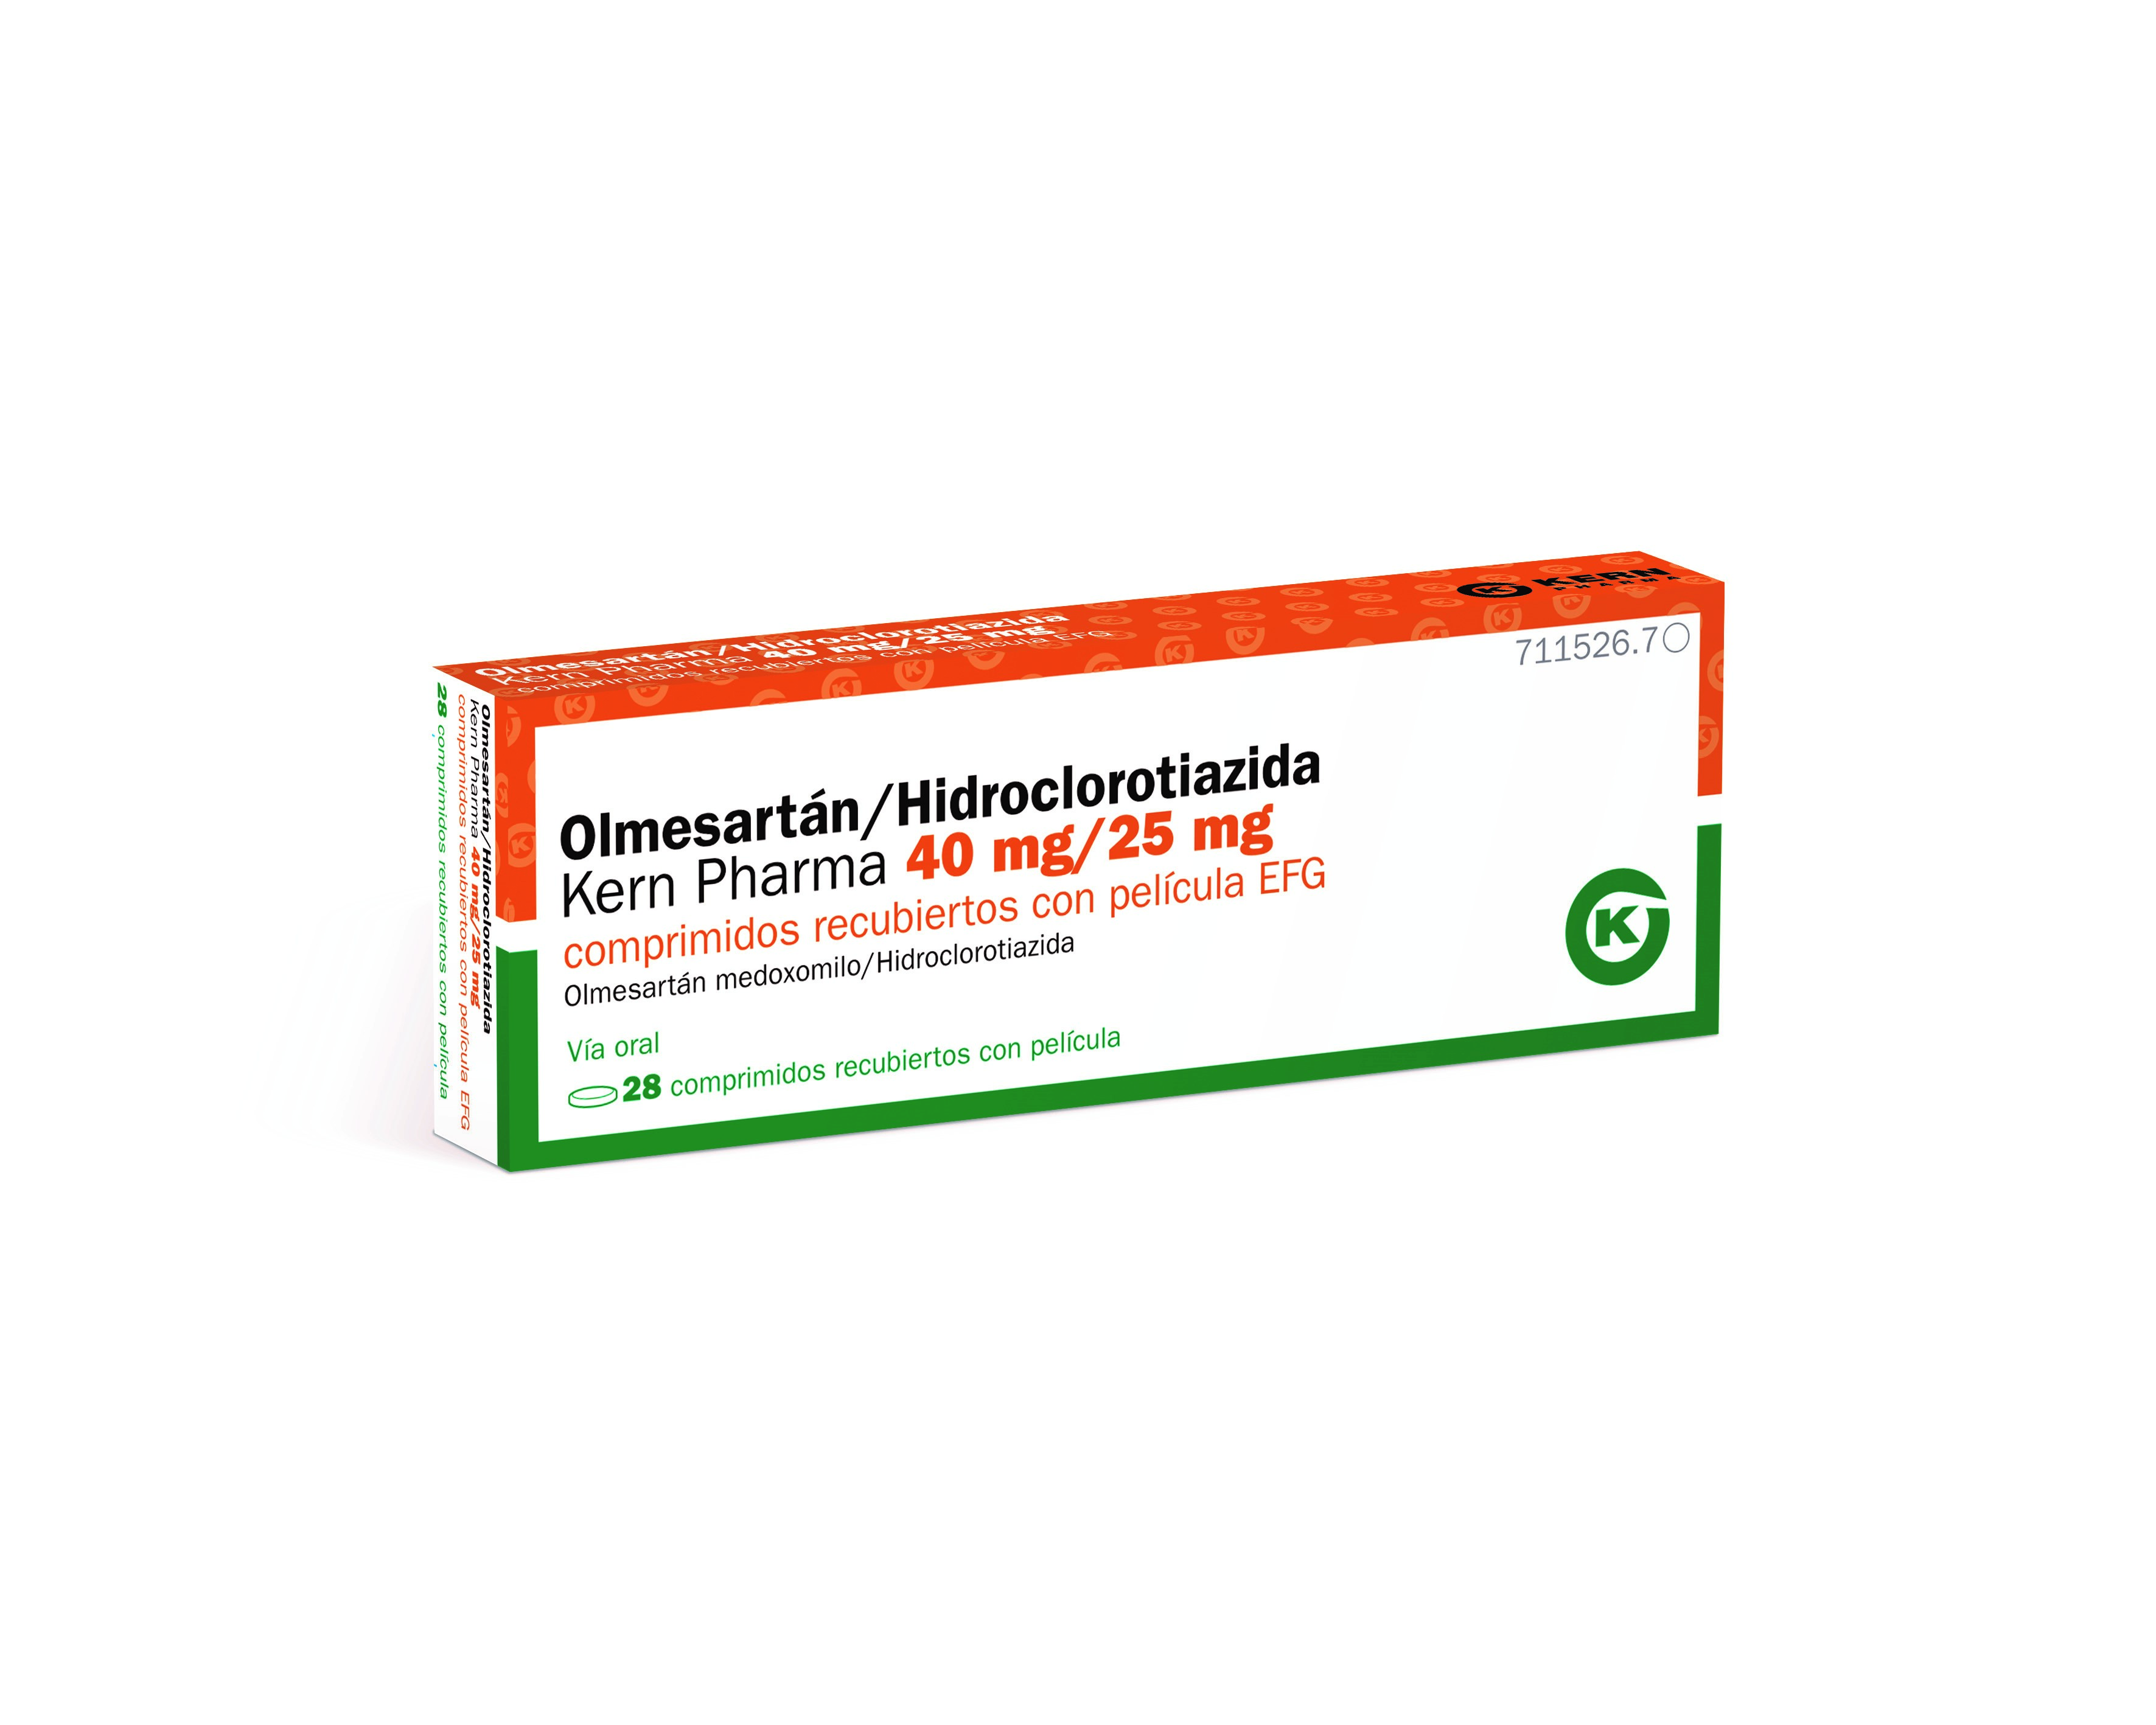 Olmesartan Hidroclorotiazida Efg 40 Mg 25 Mg 28 Compr Recub